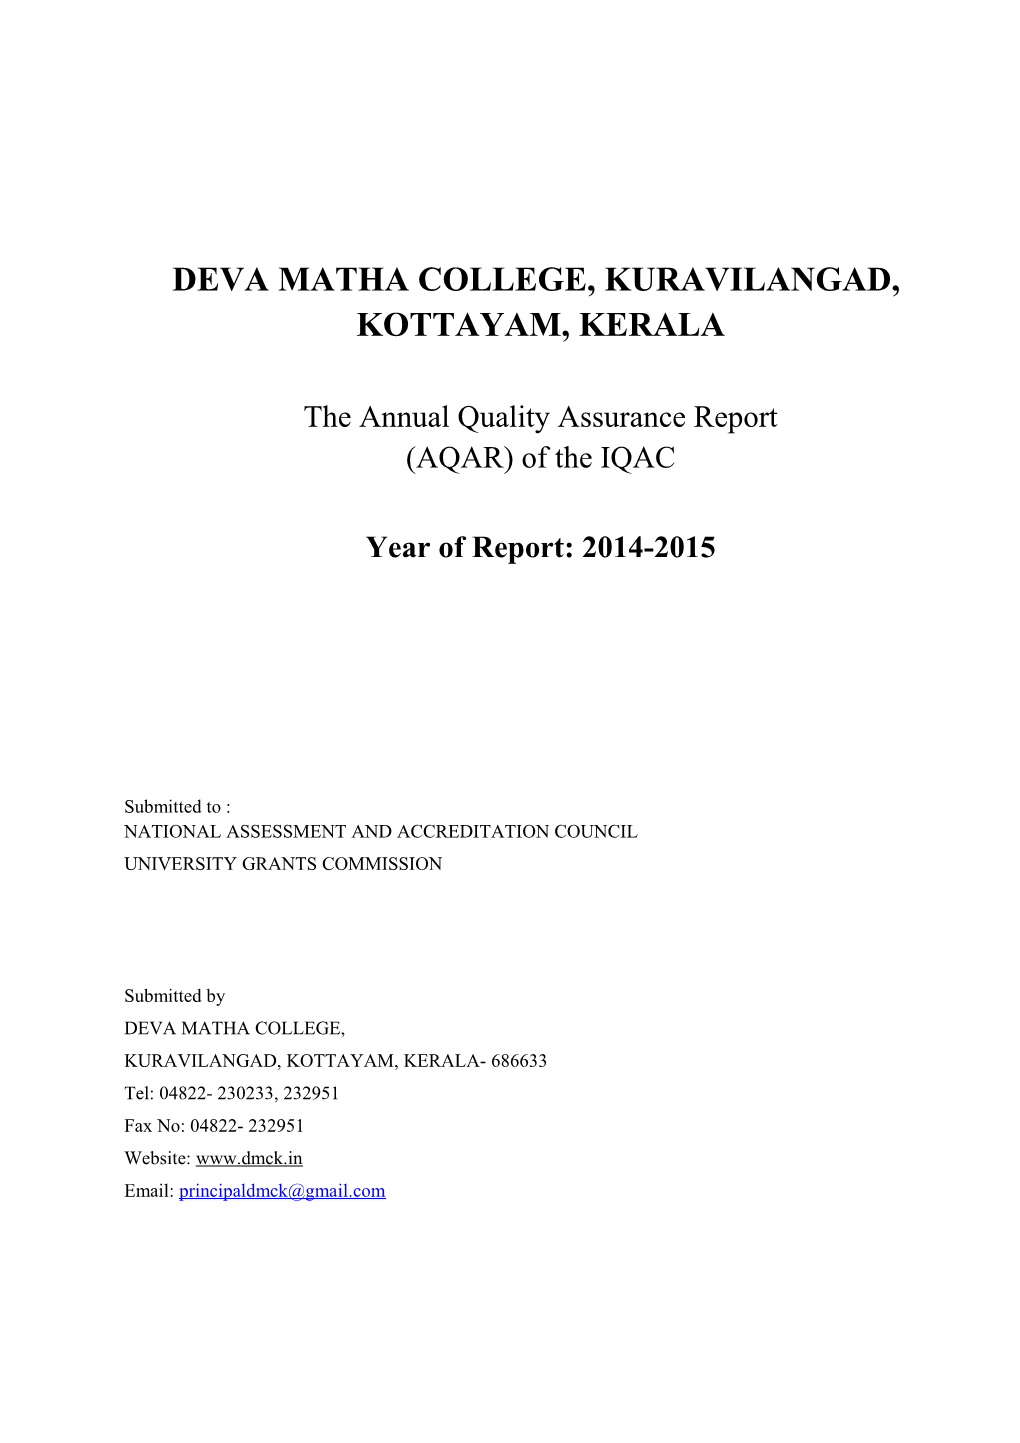 Deva Matha College, Kuravilangad